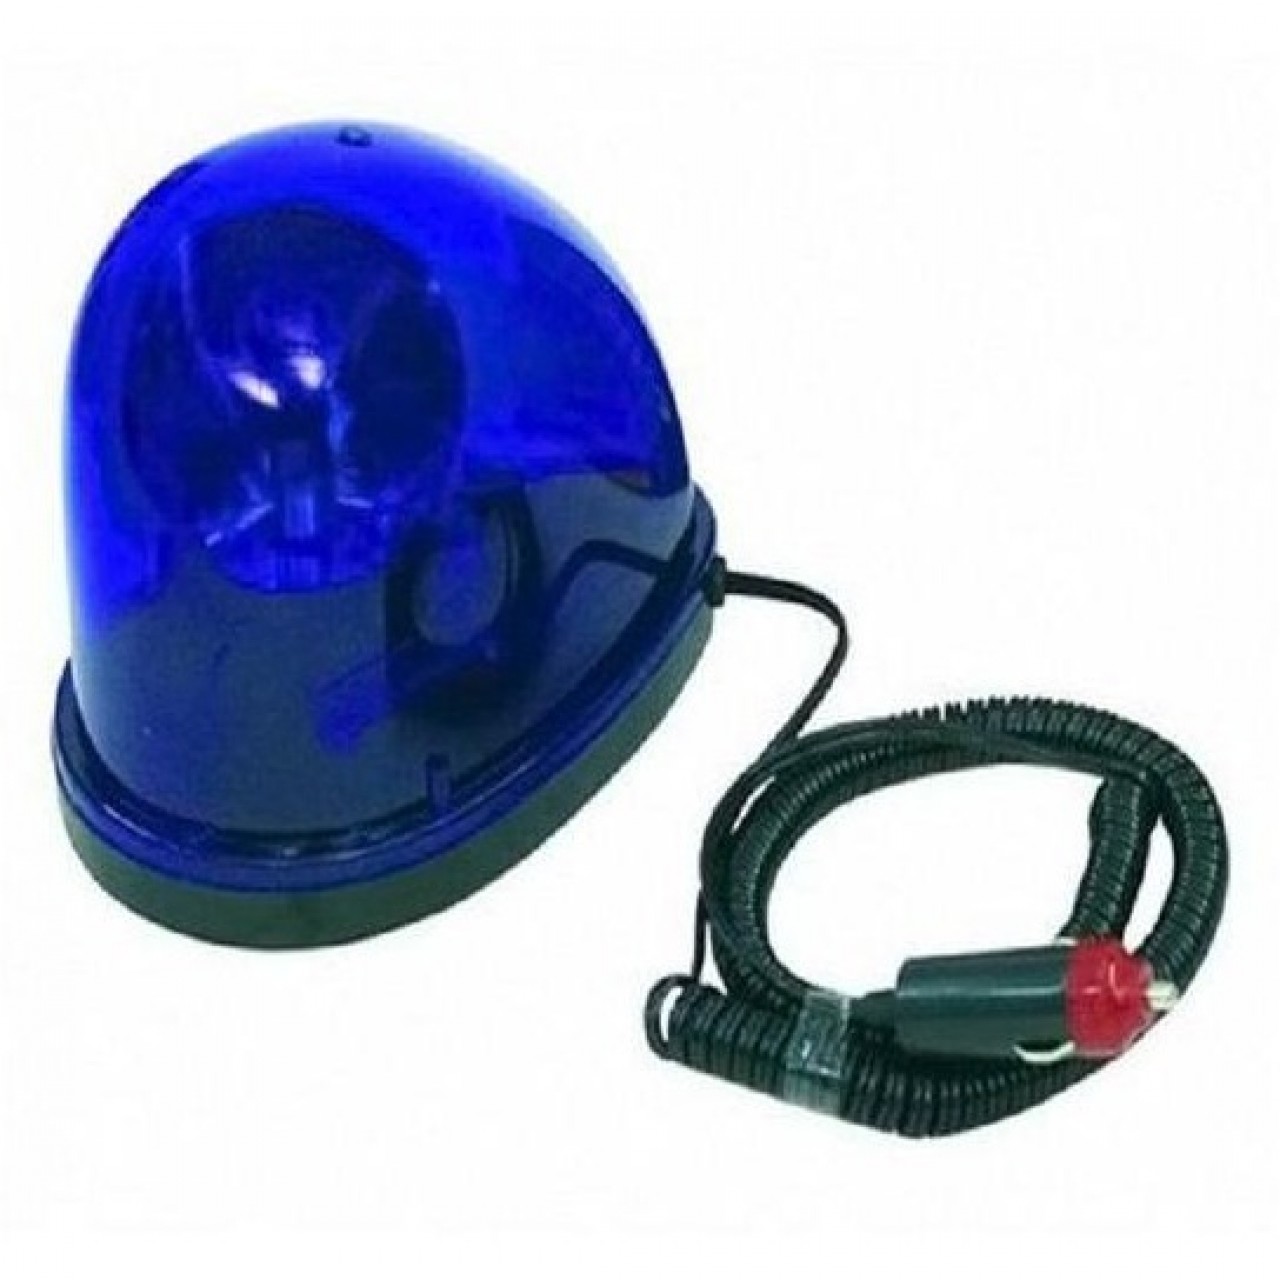 Car Beacon Strobe Emergency Light with Magnetic Mount - 12V - Blue